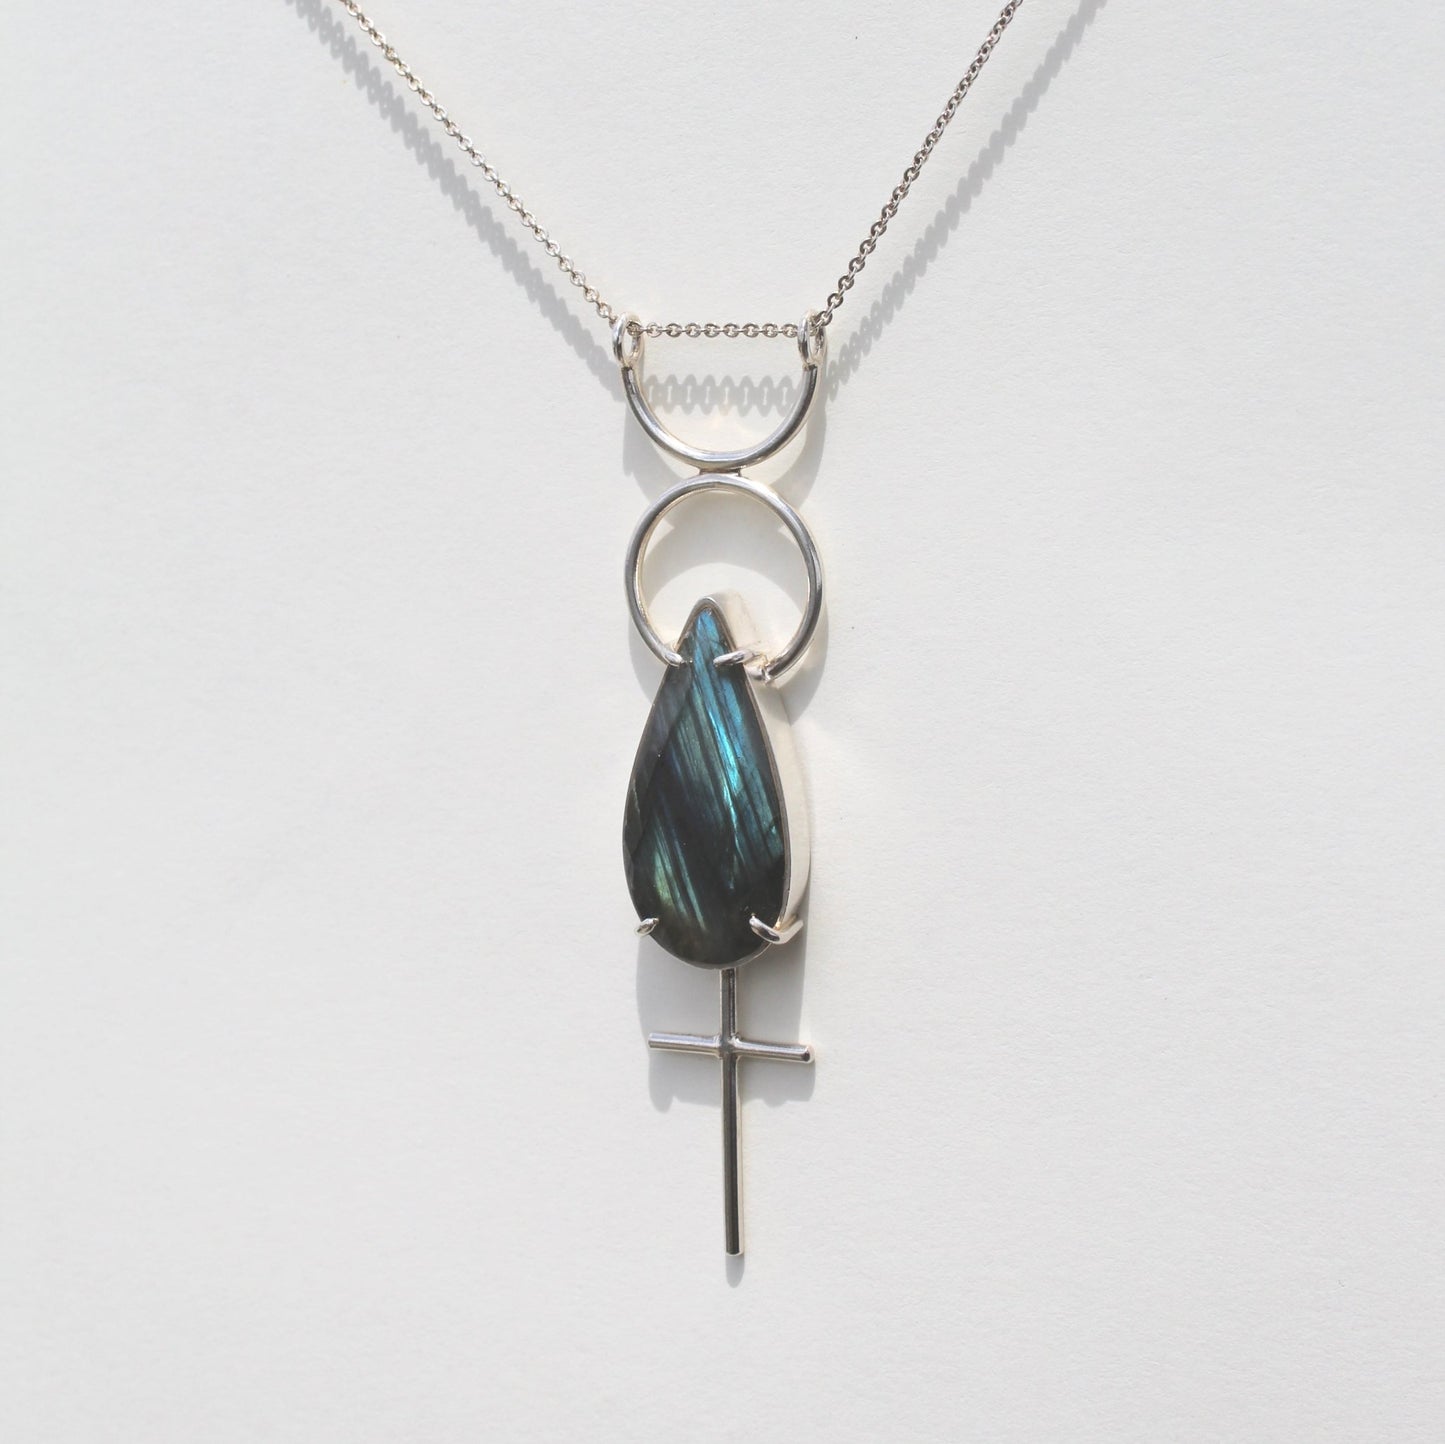 ASTROS MERCURY sterling silver and Labradorite pendant necklace